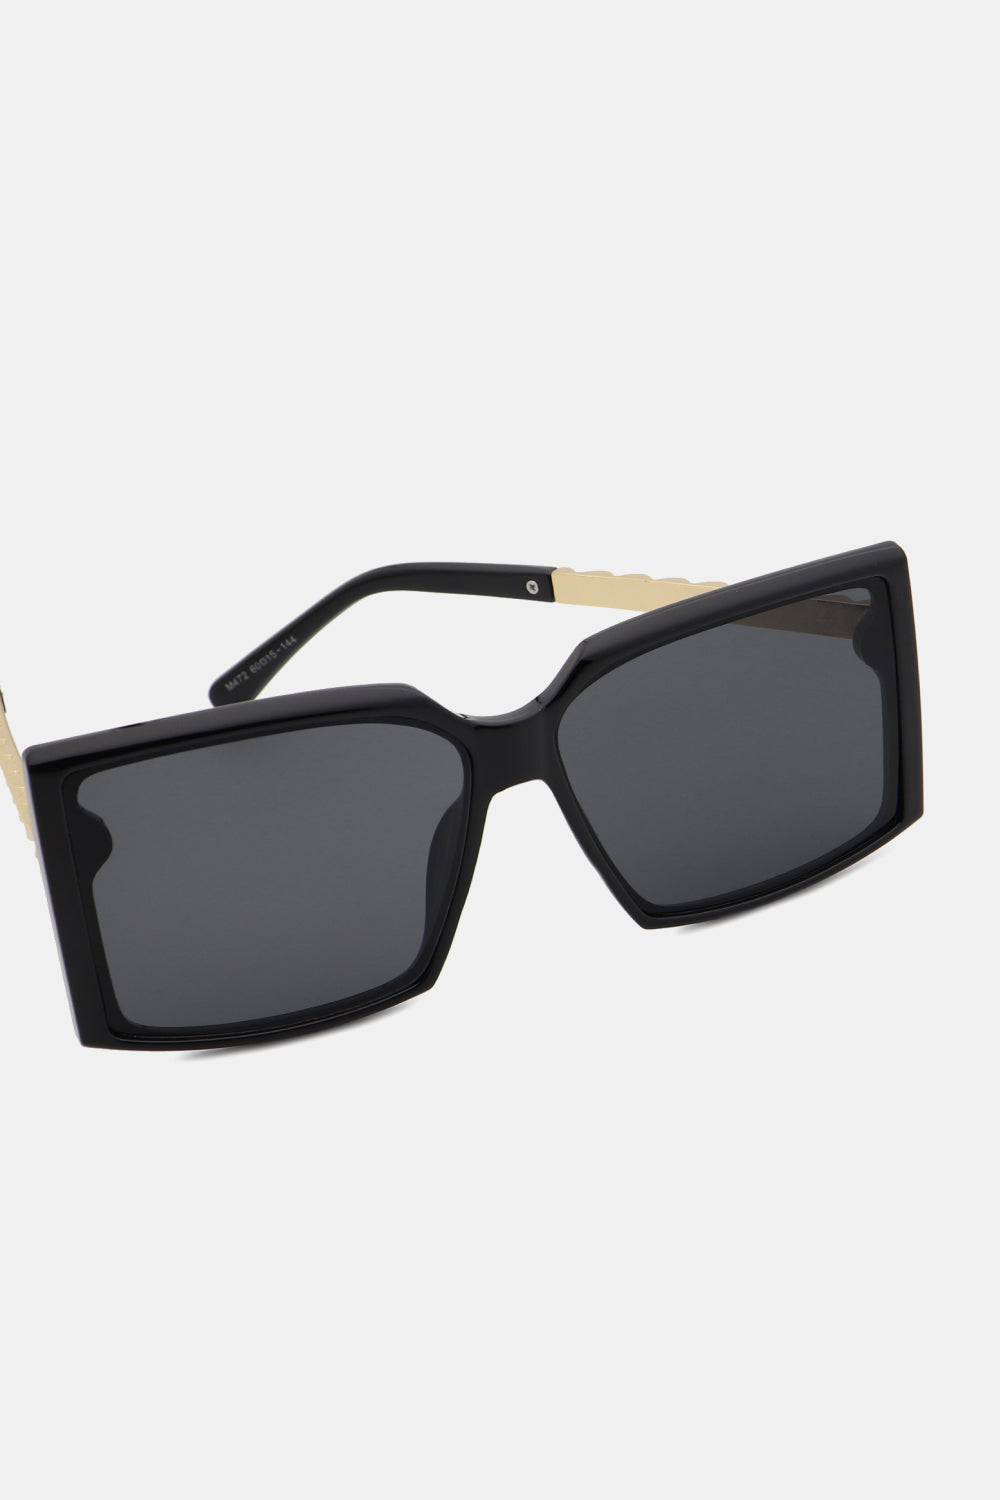 Dark Slate Gray Polycarbonate Frame Square Sunglasses Clothing